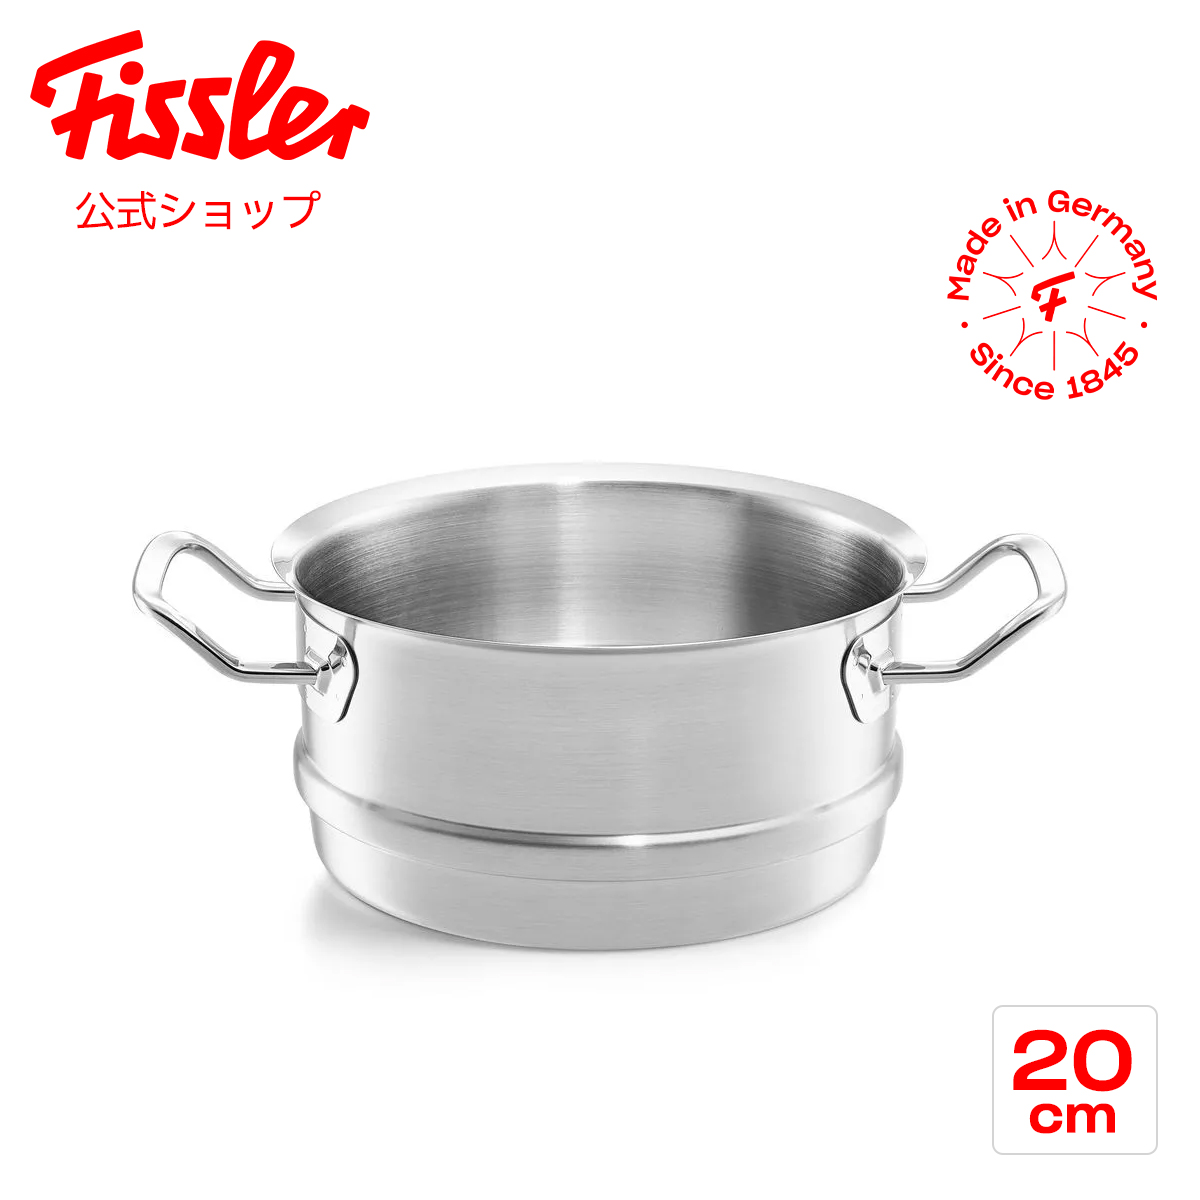 Fissler 両手鍋 20cm